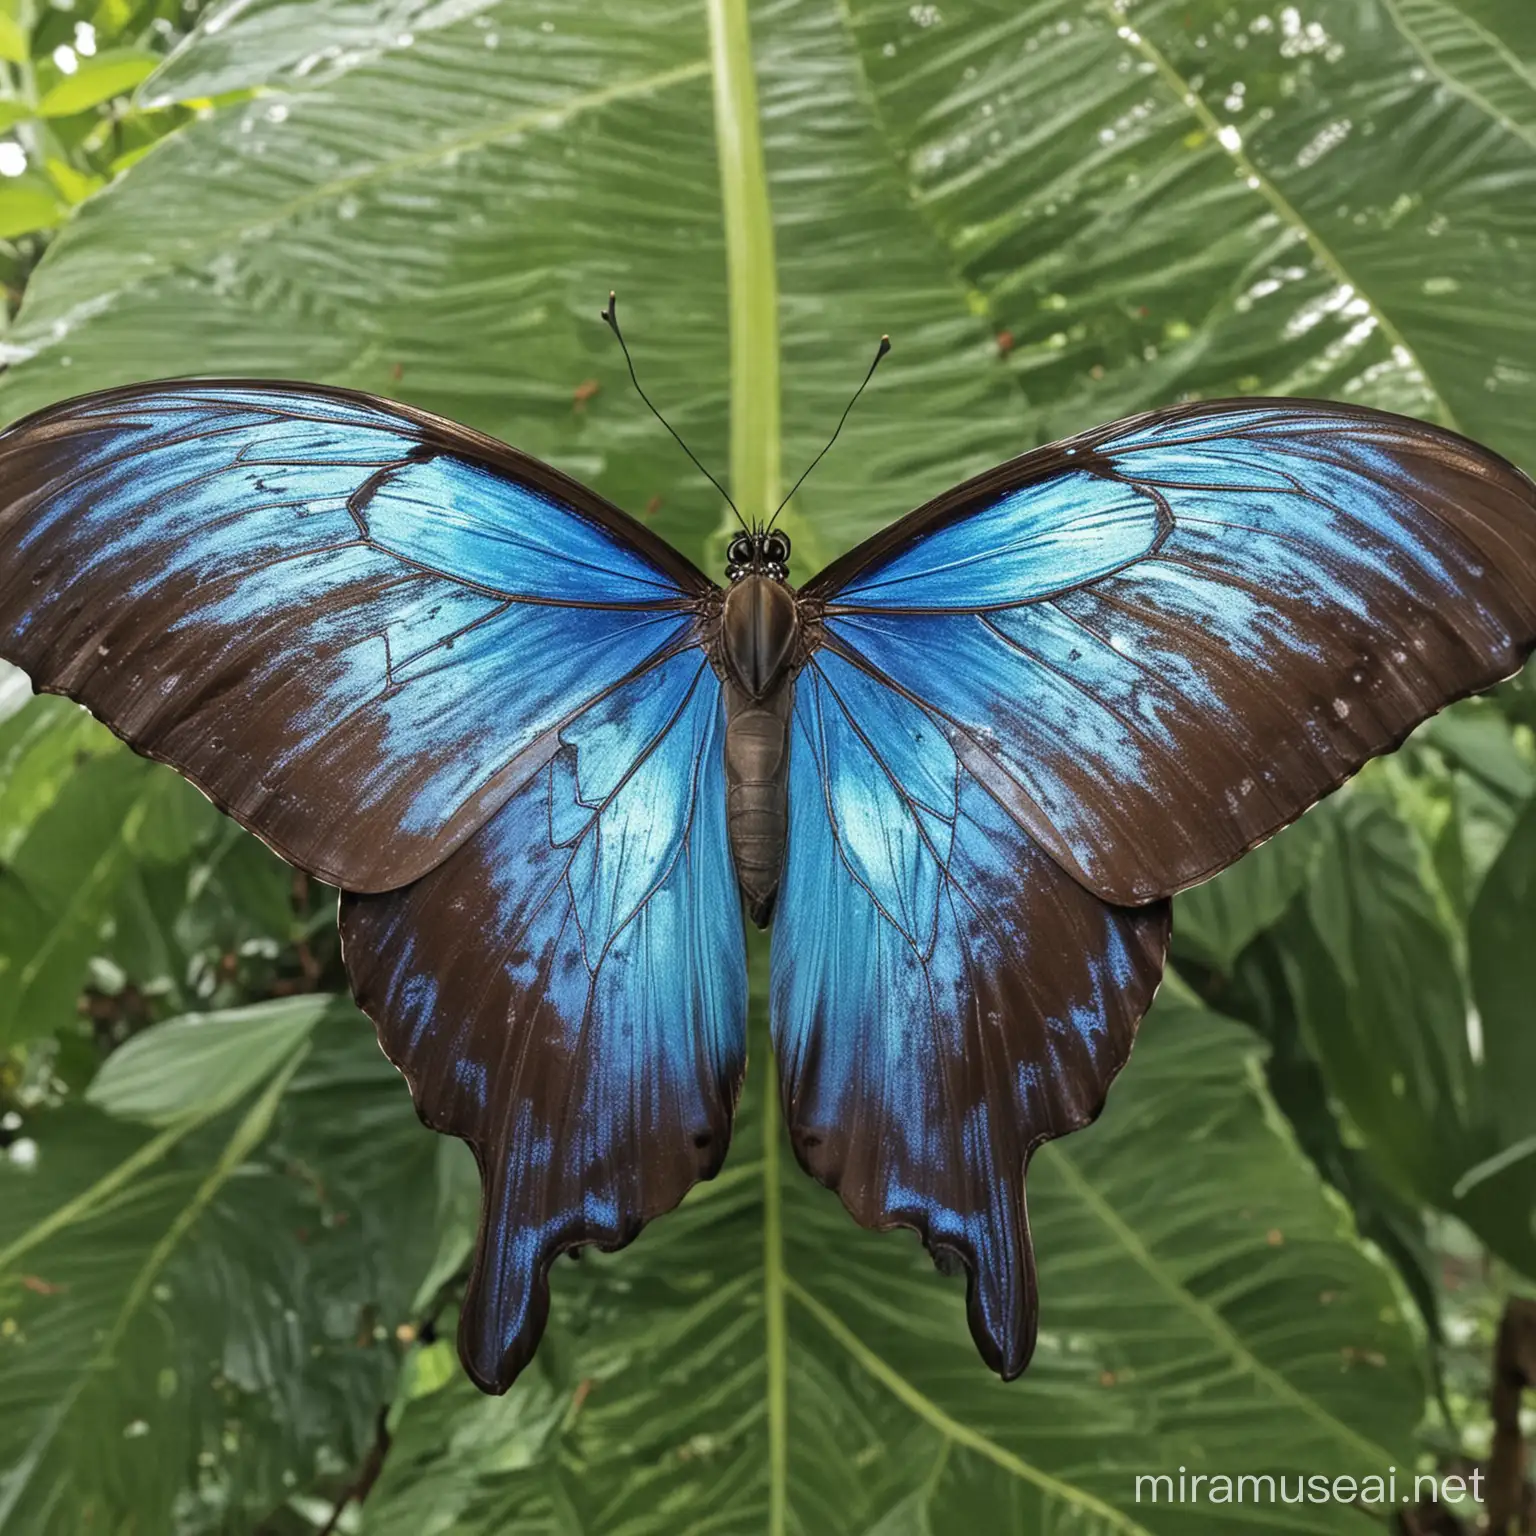 Vibrant Morpho Butterfly in Enchanted Garden